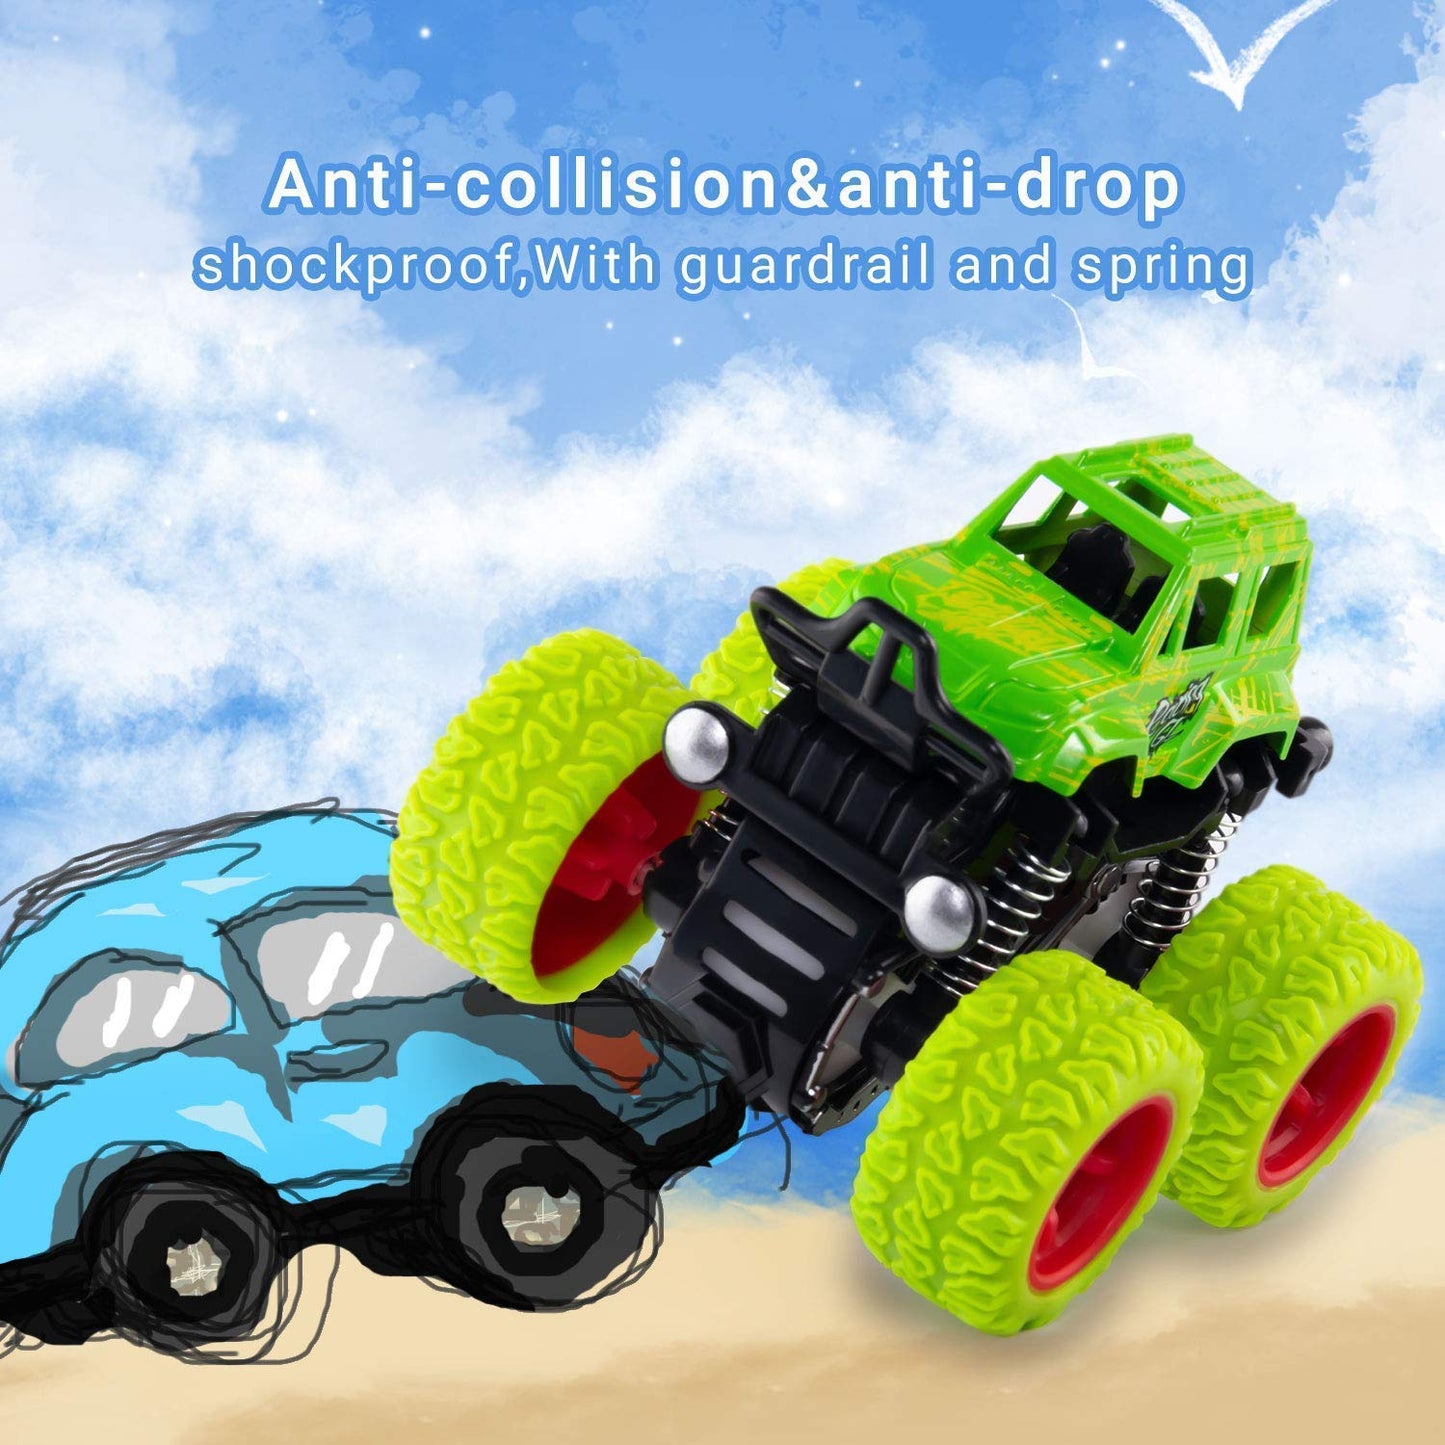 AZi® Plastic 4WD Mini Monster Trucks Friction Powered Cars for Kids Big Rubber Tires Baby Boys Super Cars Blaze Truck Children Gift Toys, Pack of 4, Multicolor